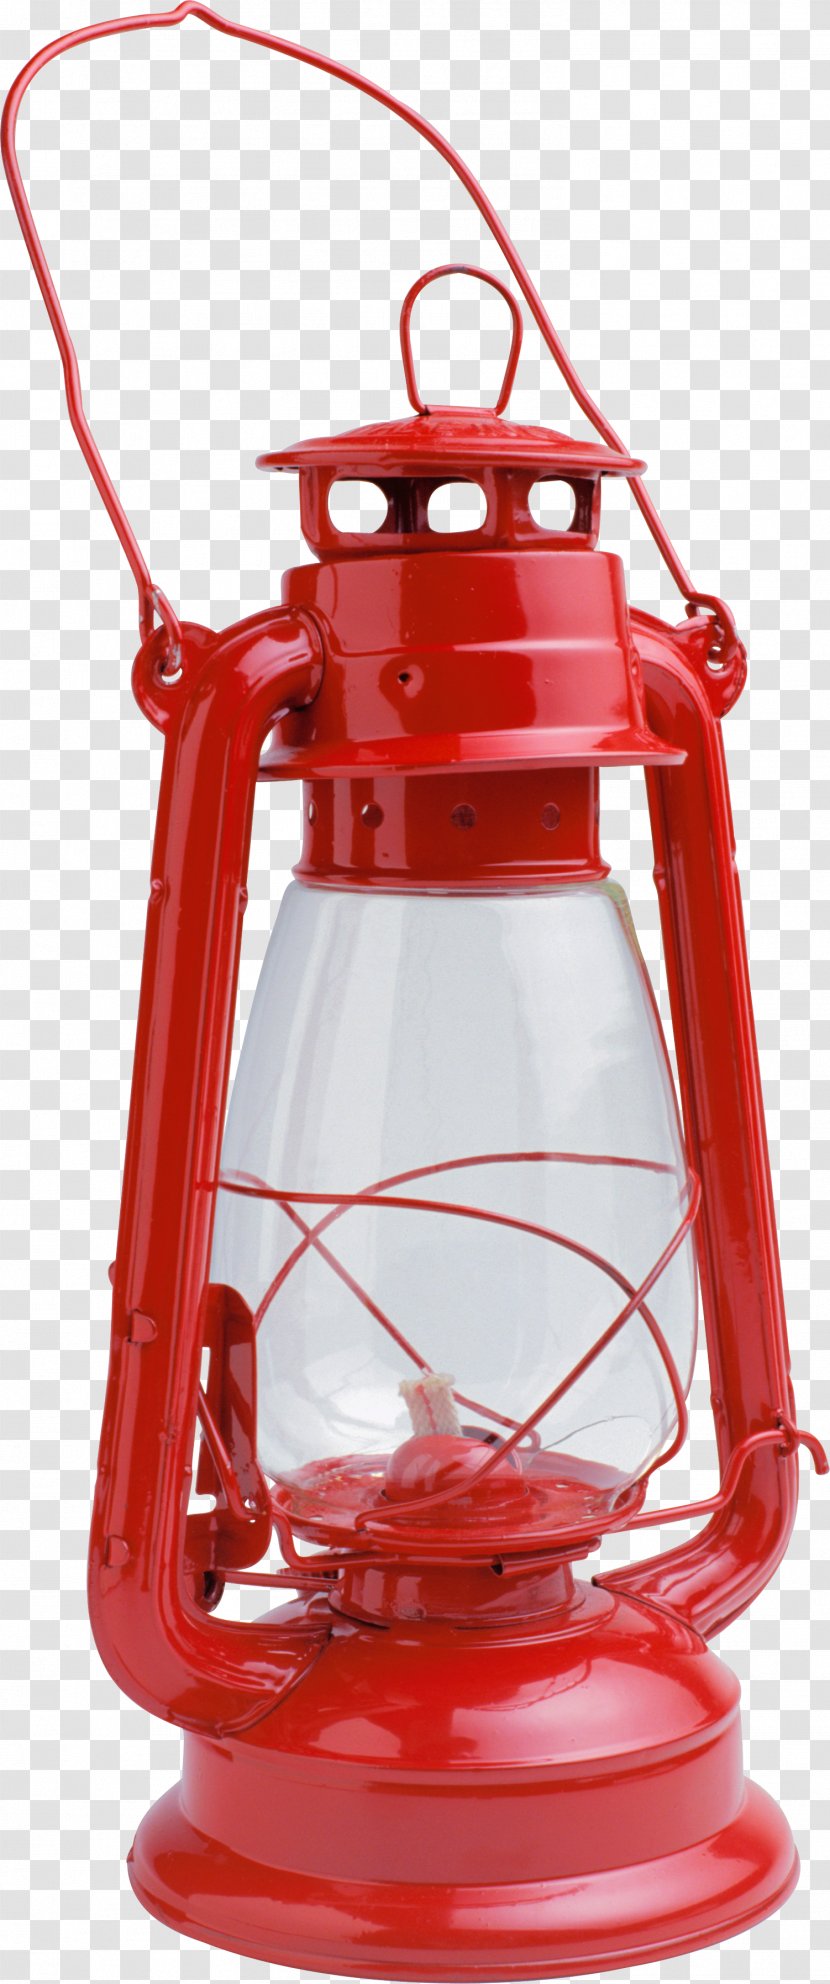 Candle Lantern Kerosene Lamp - Fire Hydrant Transparent PNG